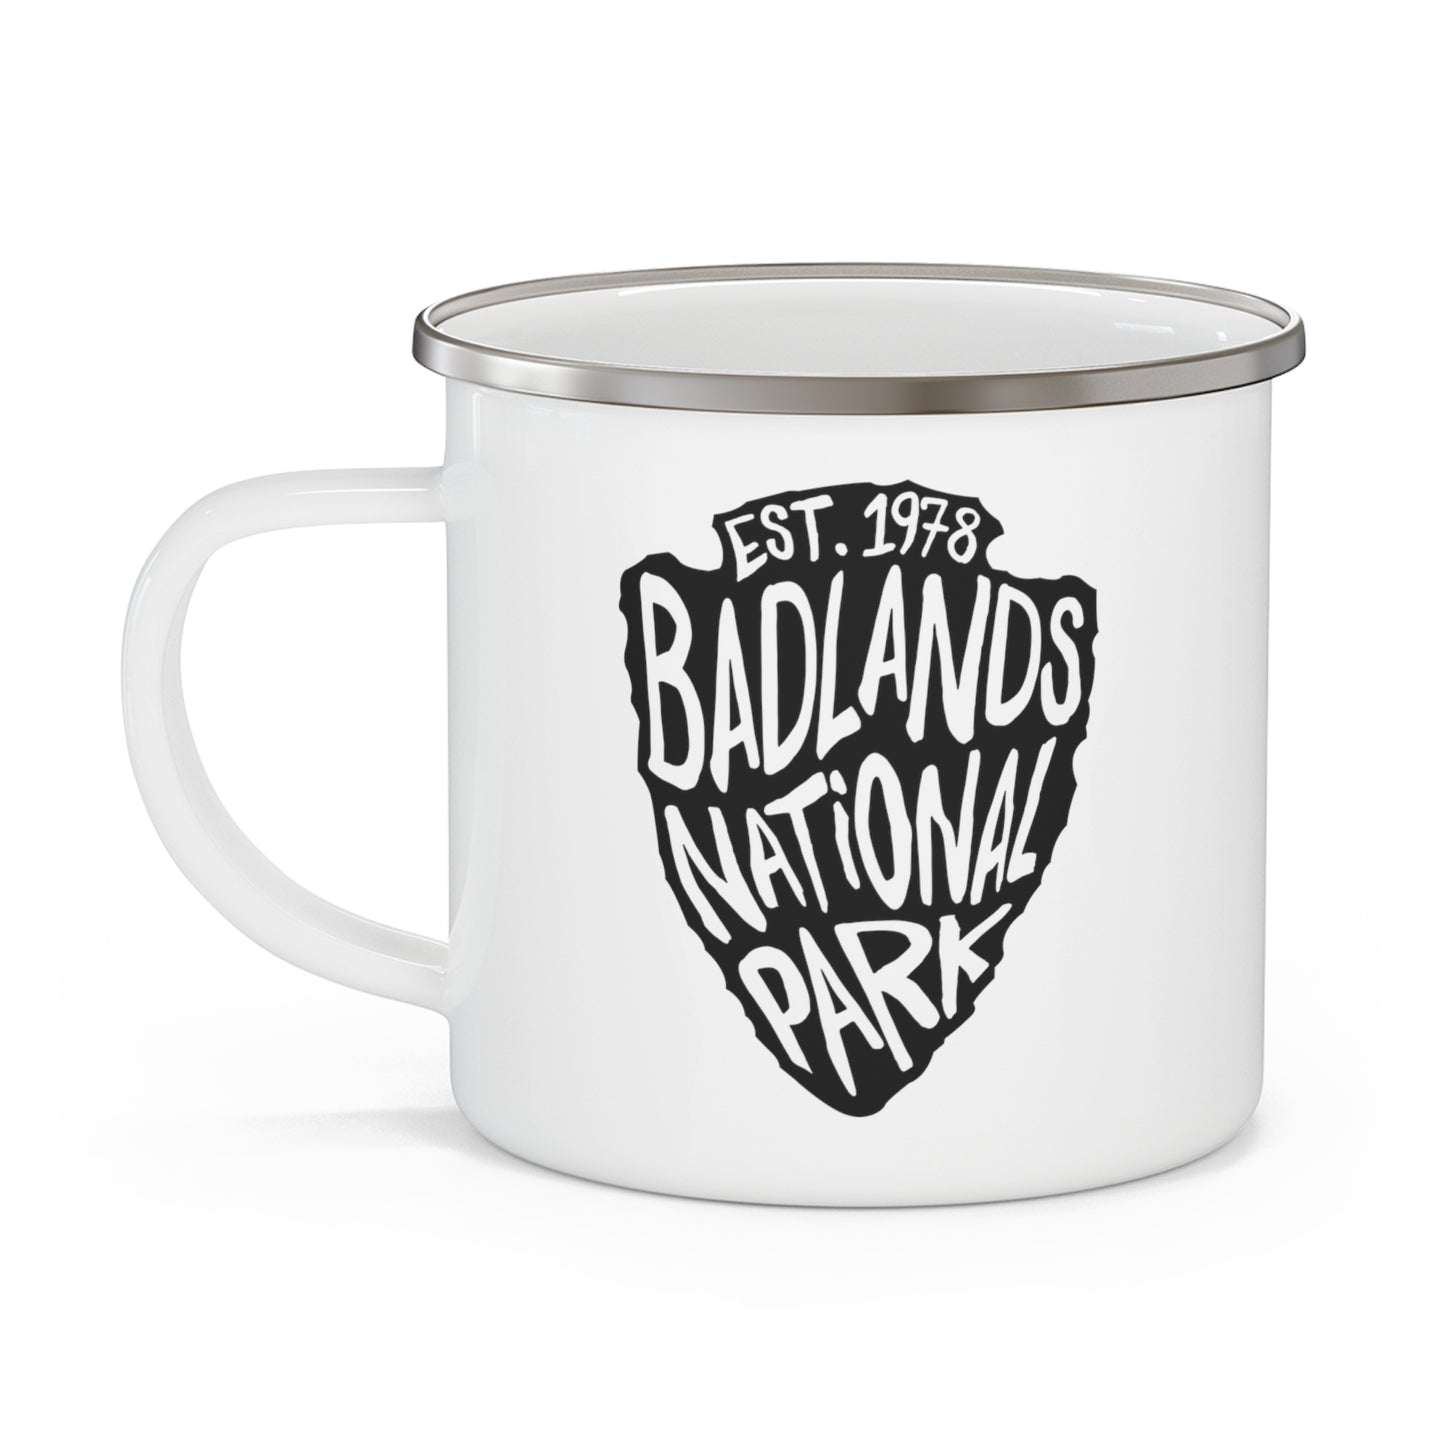 Badlands National Park Enamel Camping Mug - Arrowhead